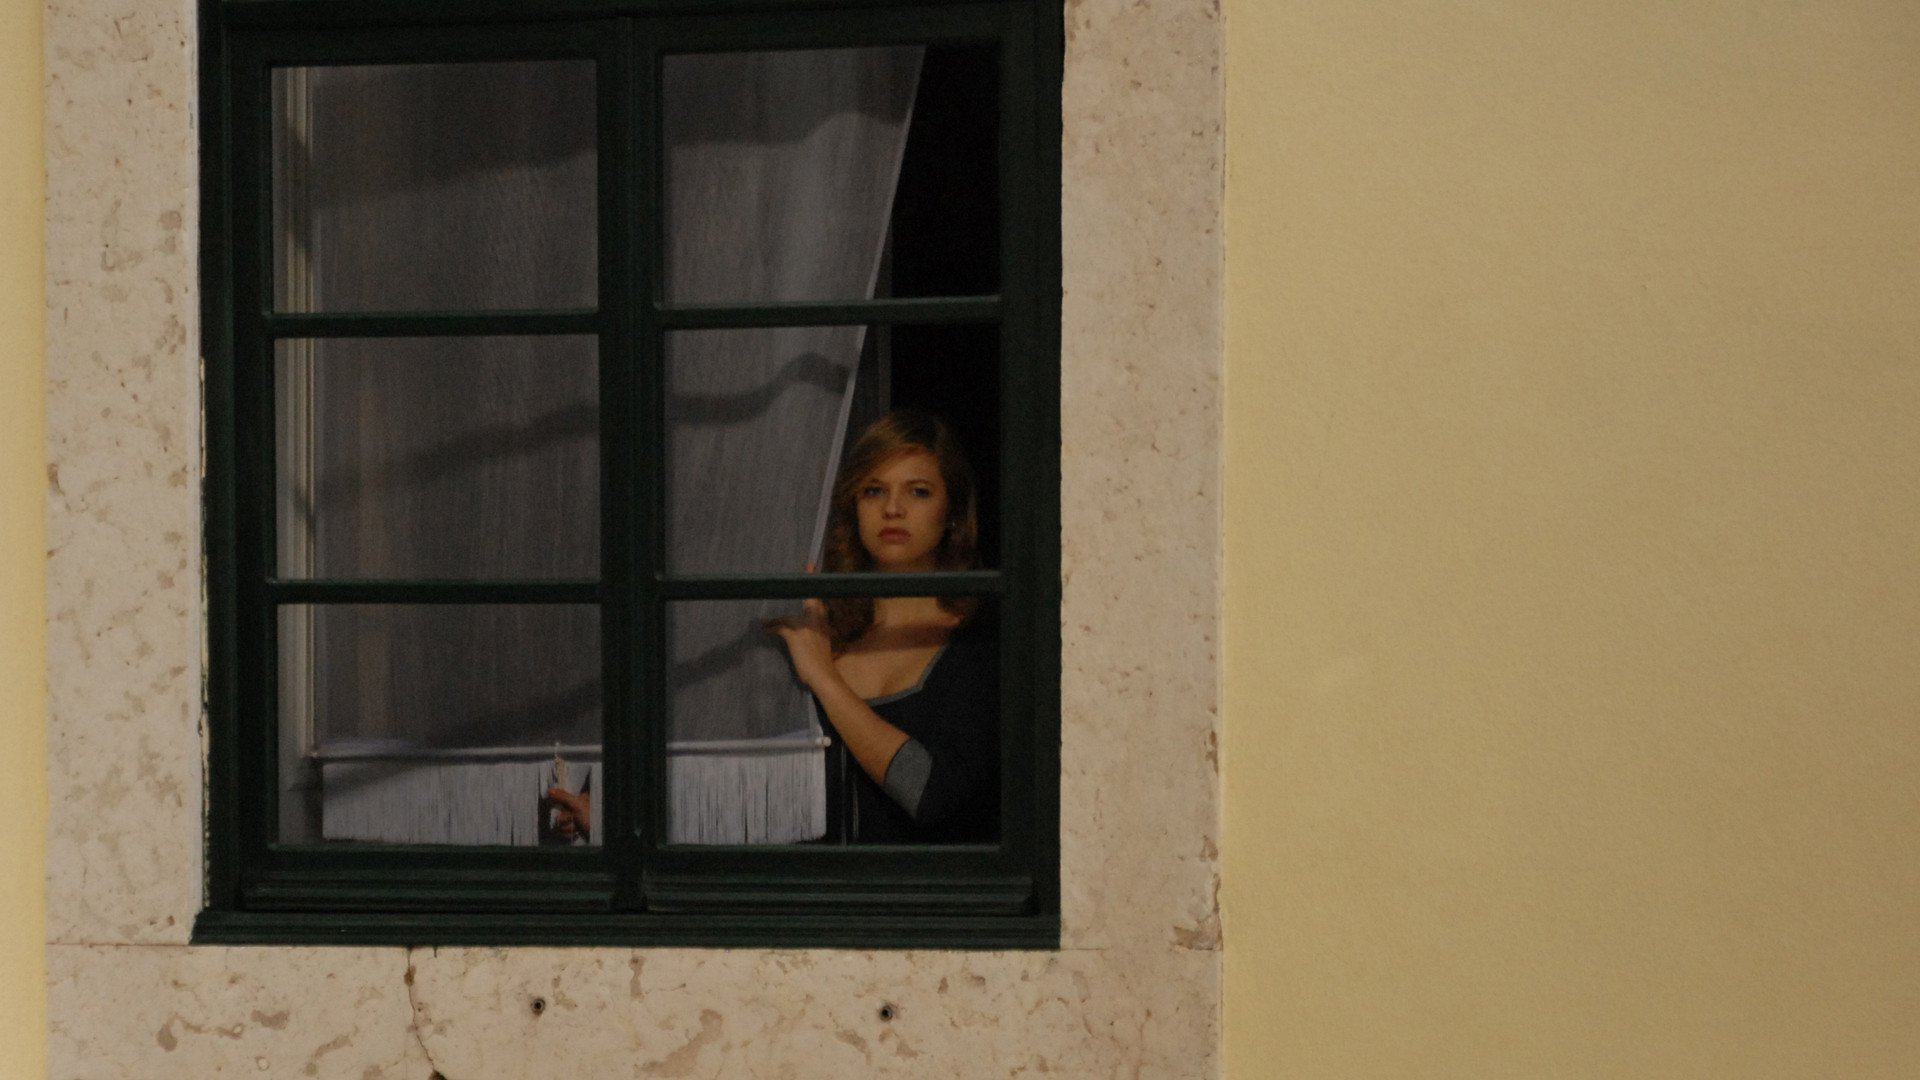 Подглядывание видов. Окна напротив. Девошка в окне на против. Девушка в окне напротив. Заглядывая в окна домов.